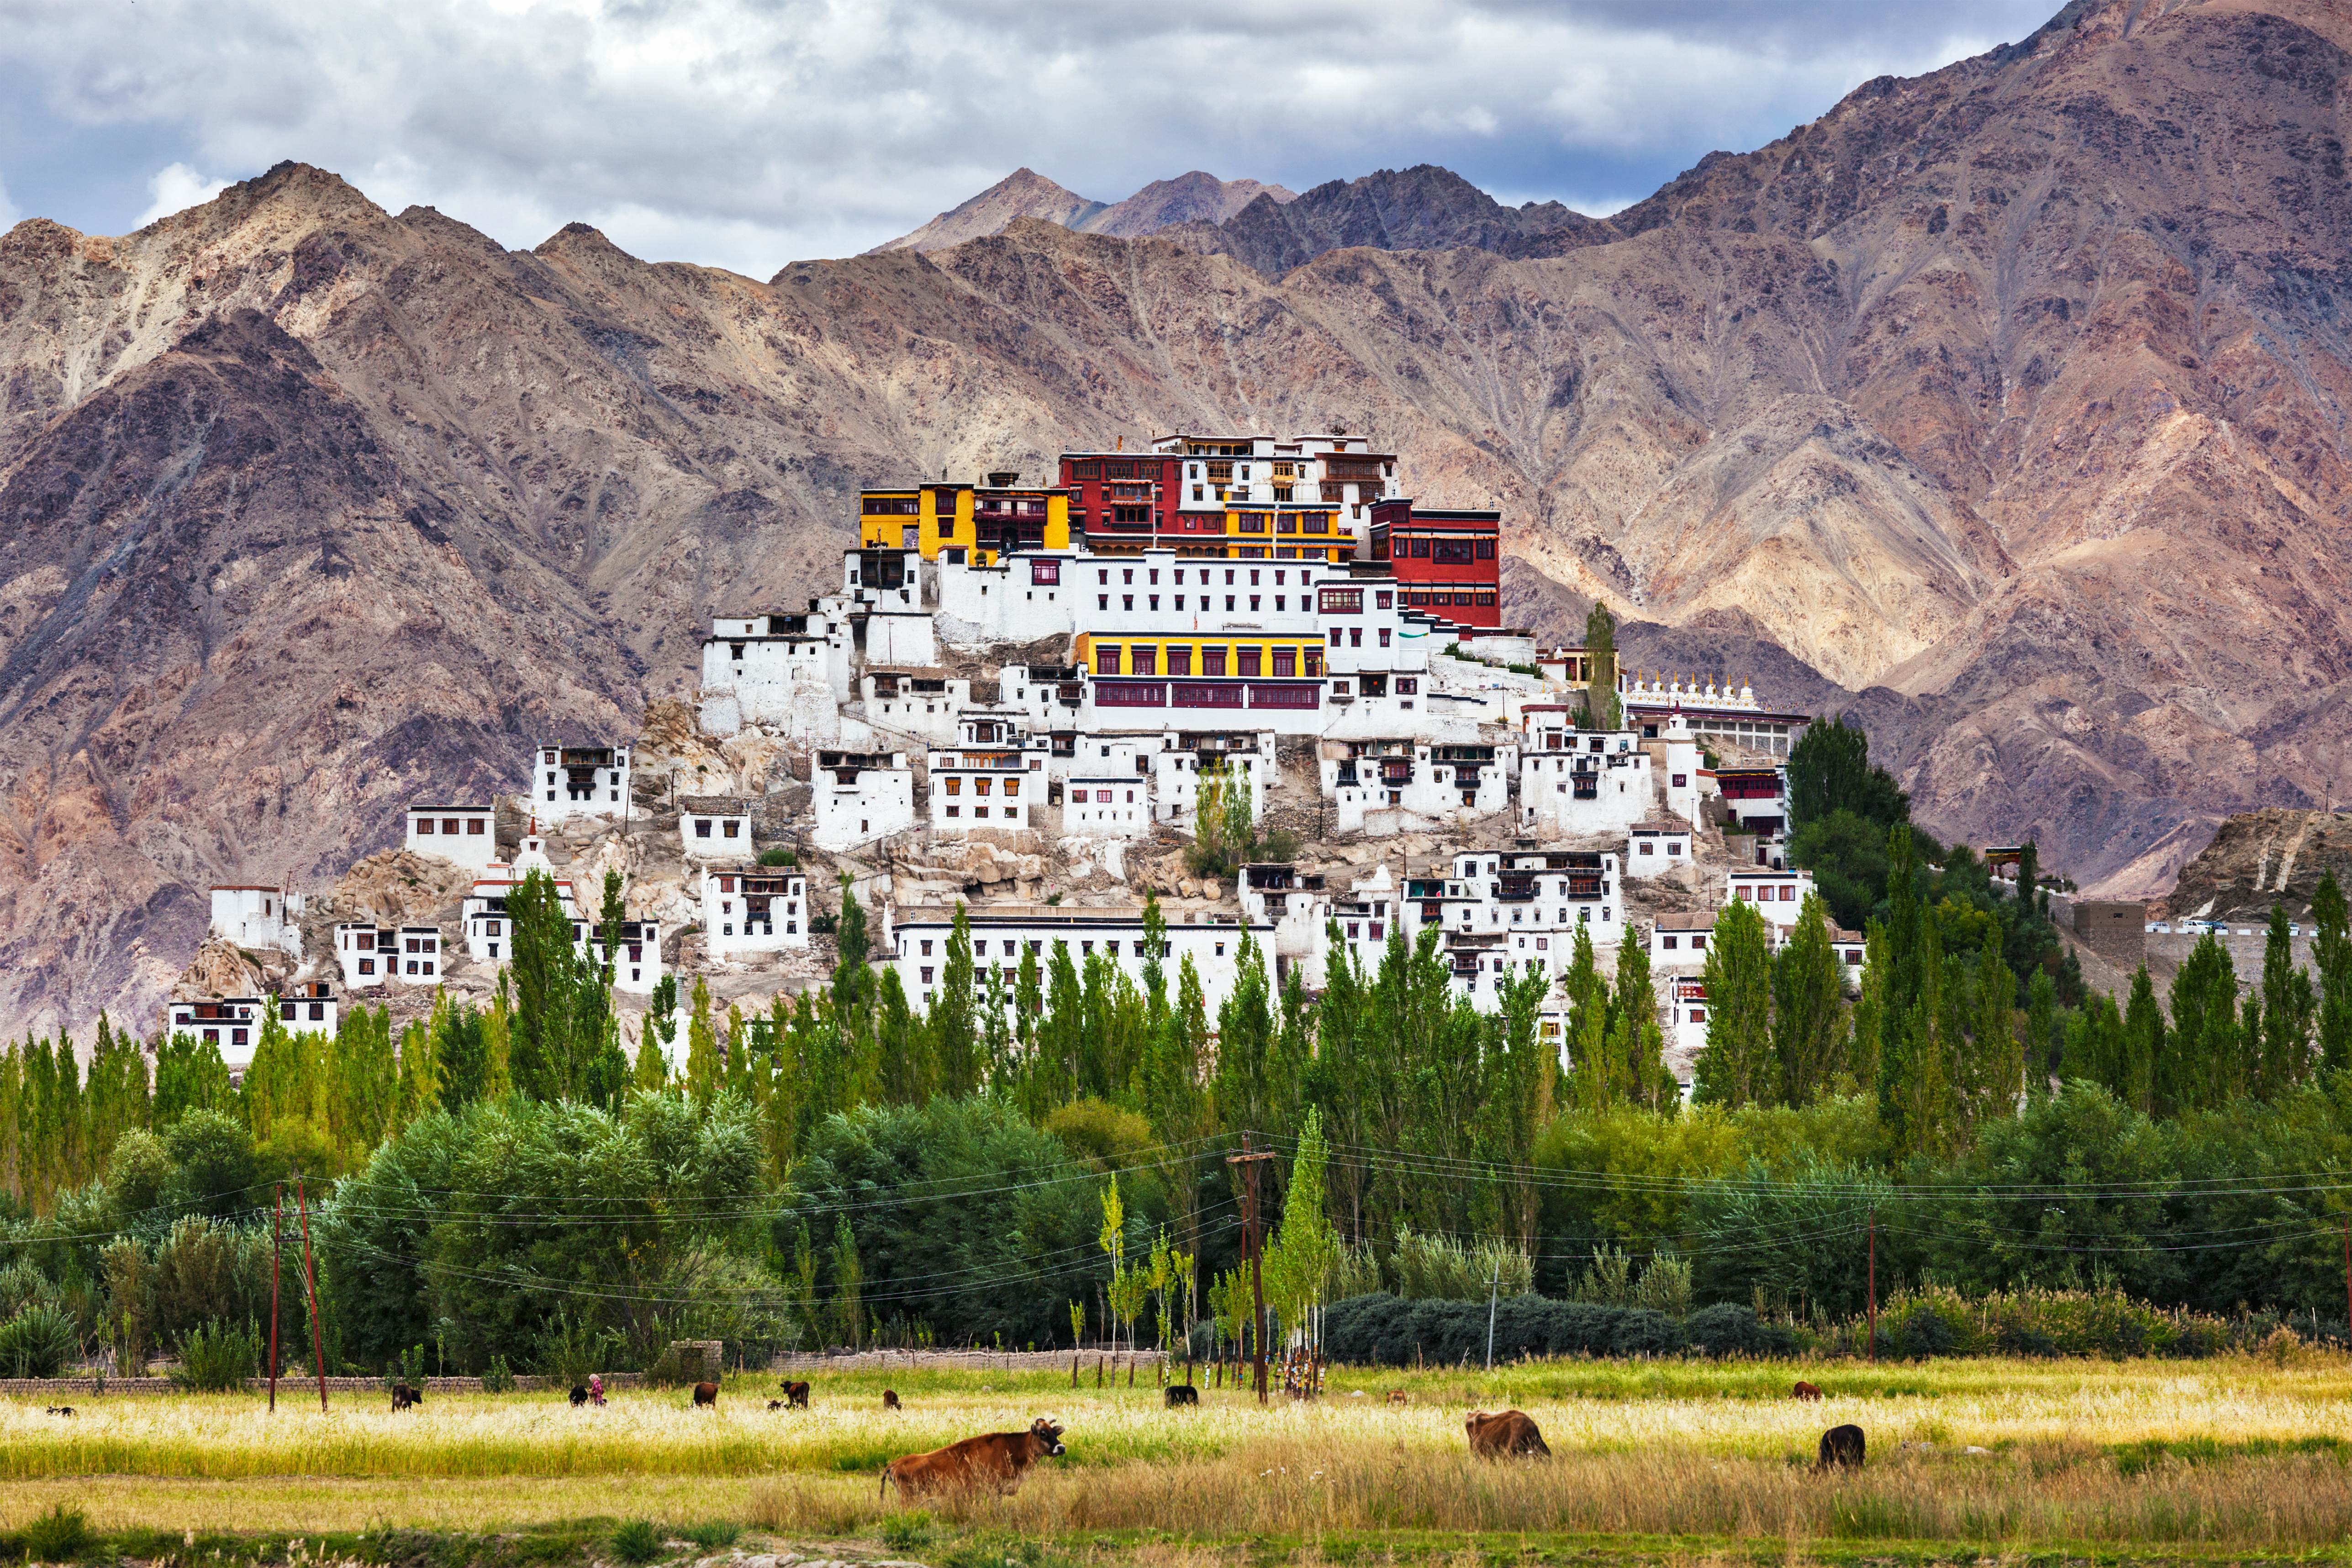 Kashmir & Ladakh travel - Lonely Planet | India, Asia